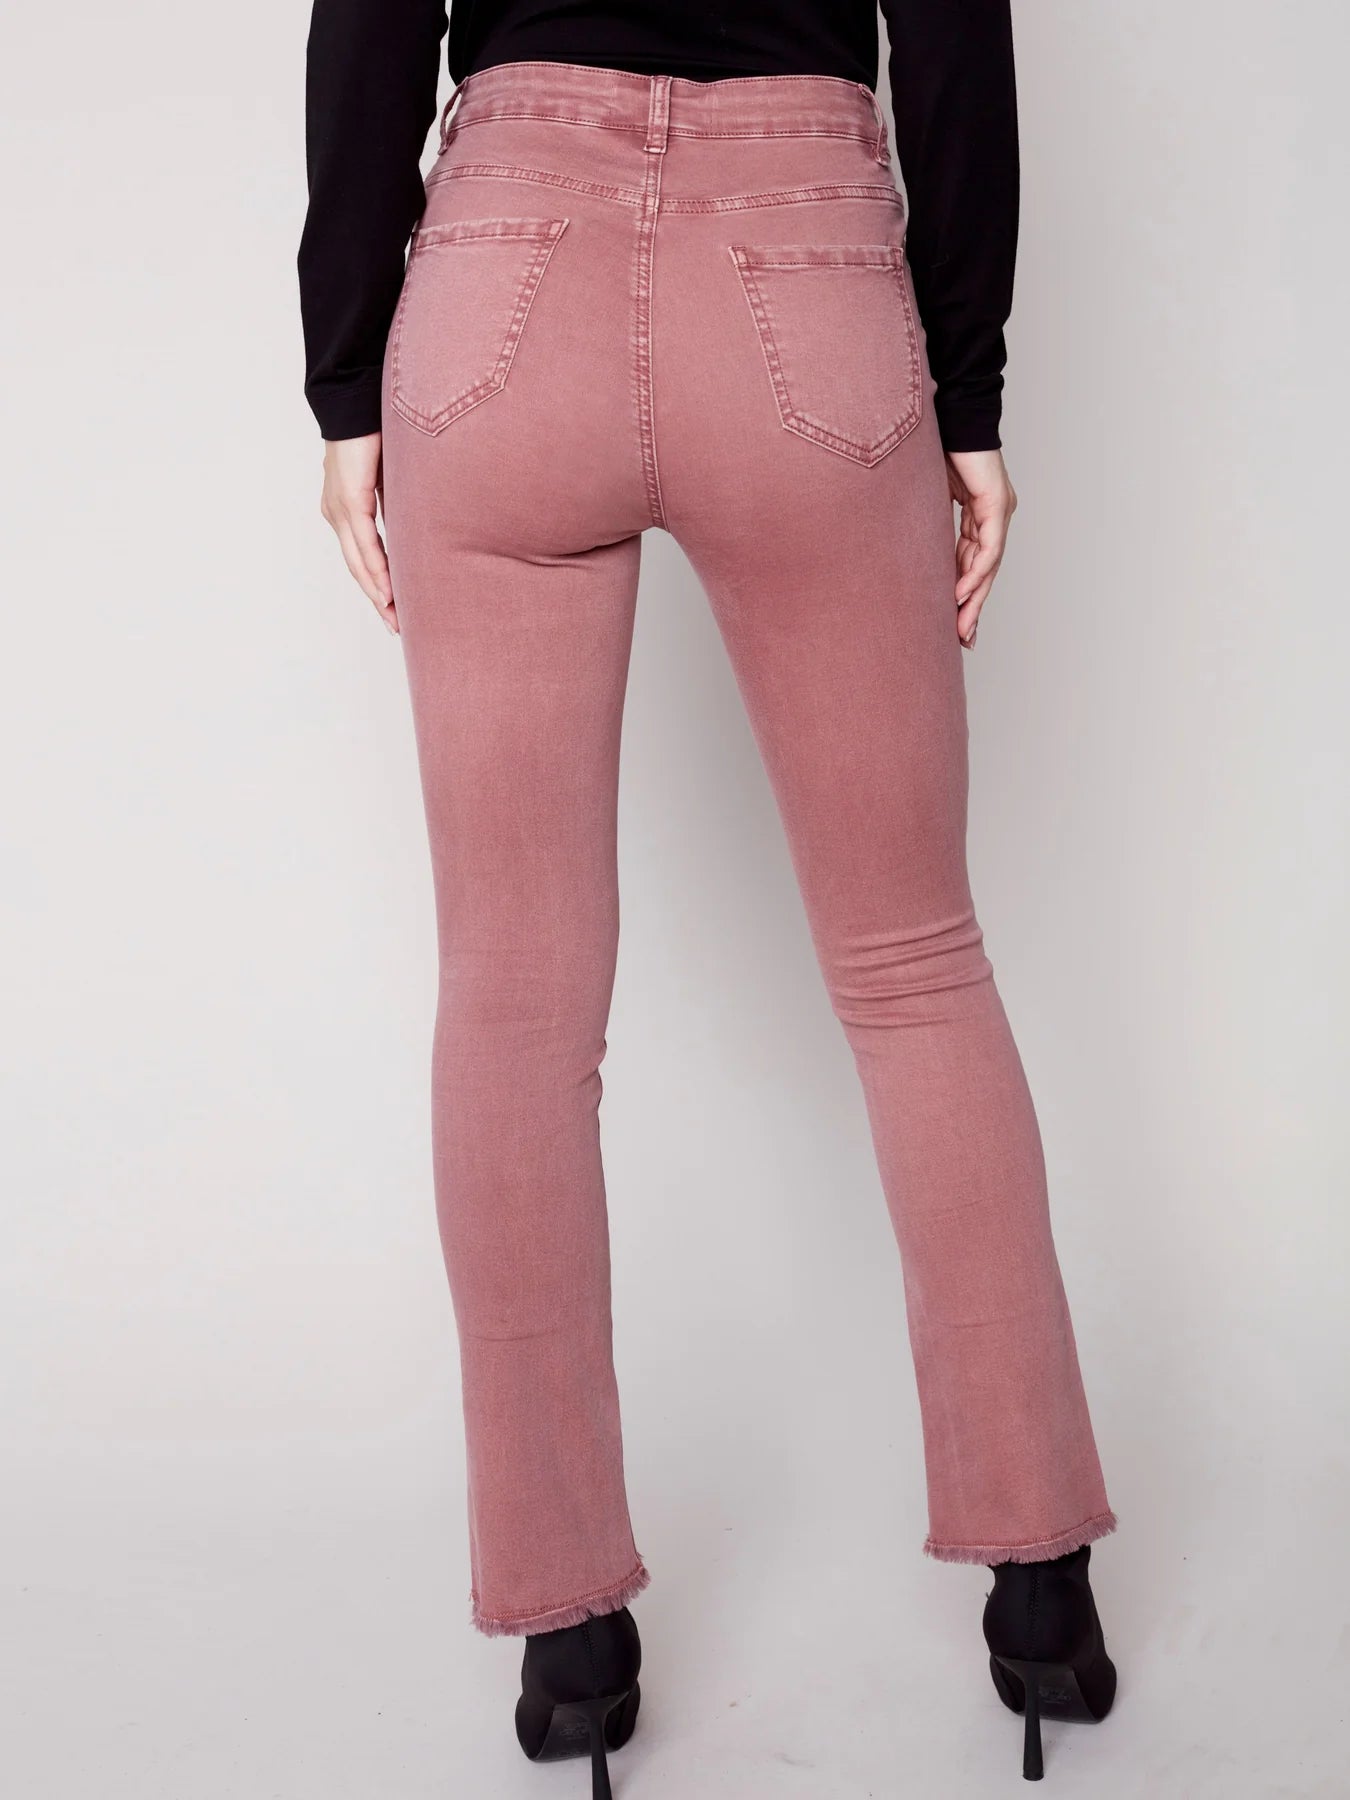 Charlie B Bootcut Jeans with Asymmetrical Fringed Hem - Raspberry